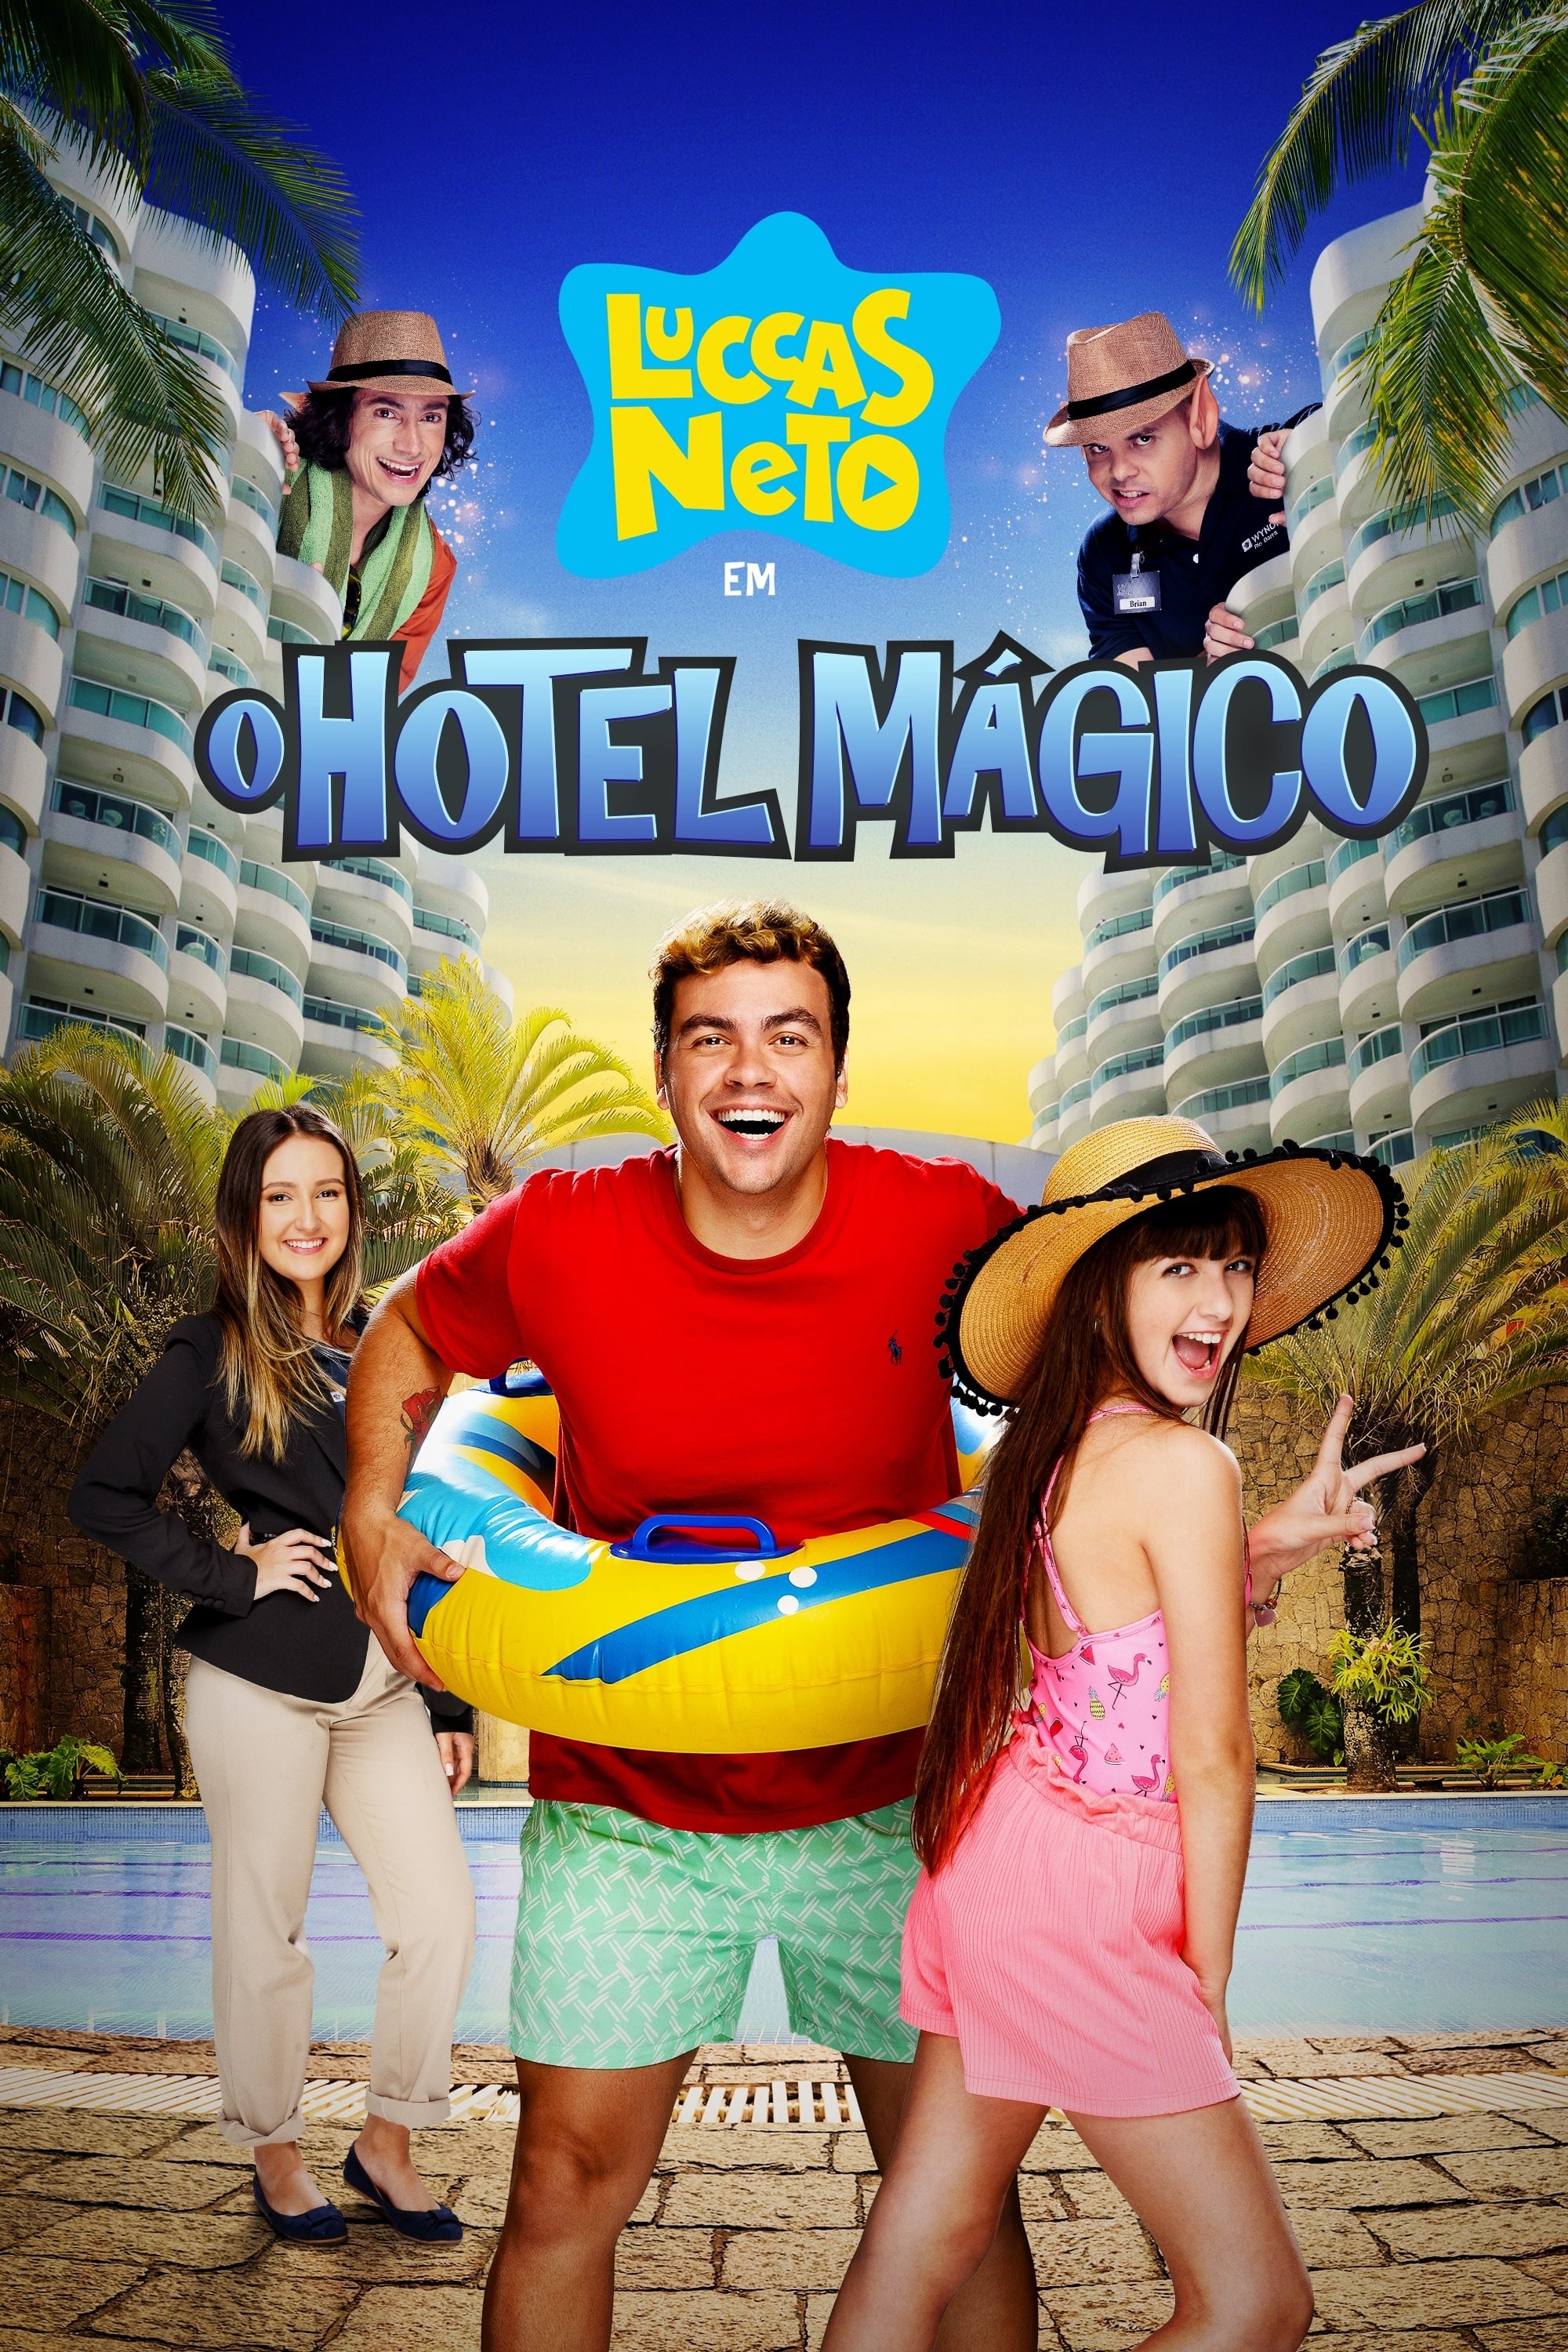 Luccas Neto in: Magic Hotel